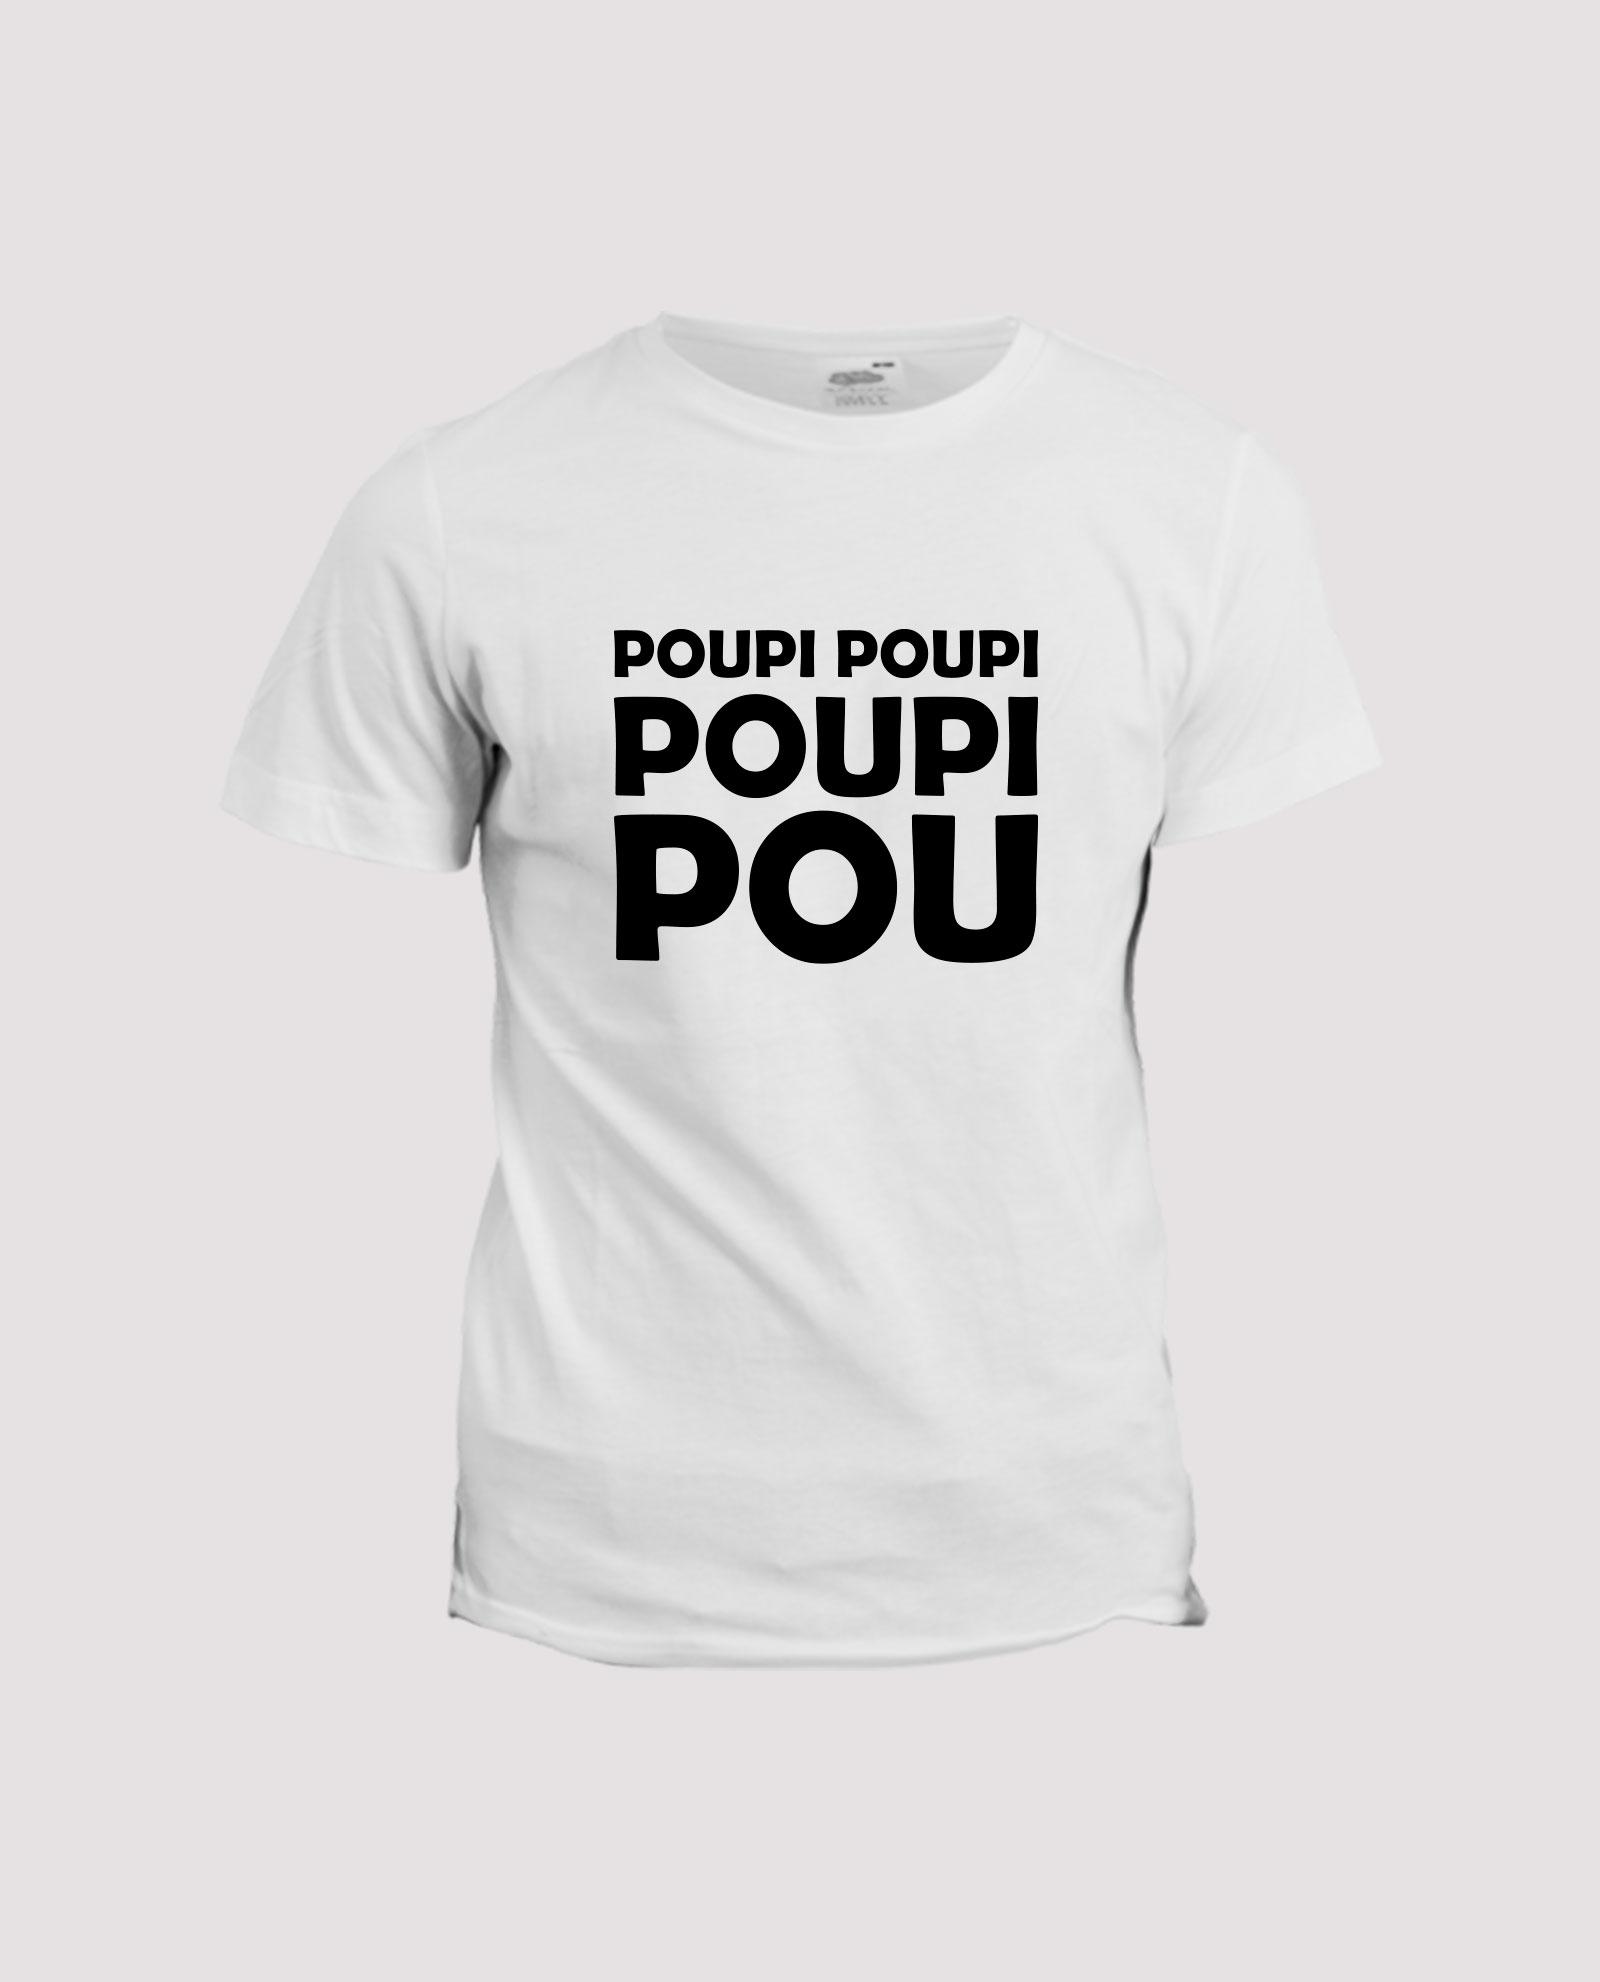 la-ligne-shop-t-shirt-malcom-dewey-poupi-opupi-poupi-pou